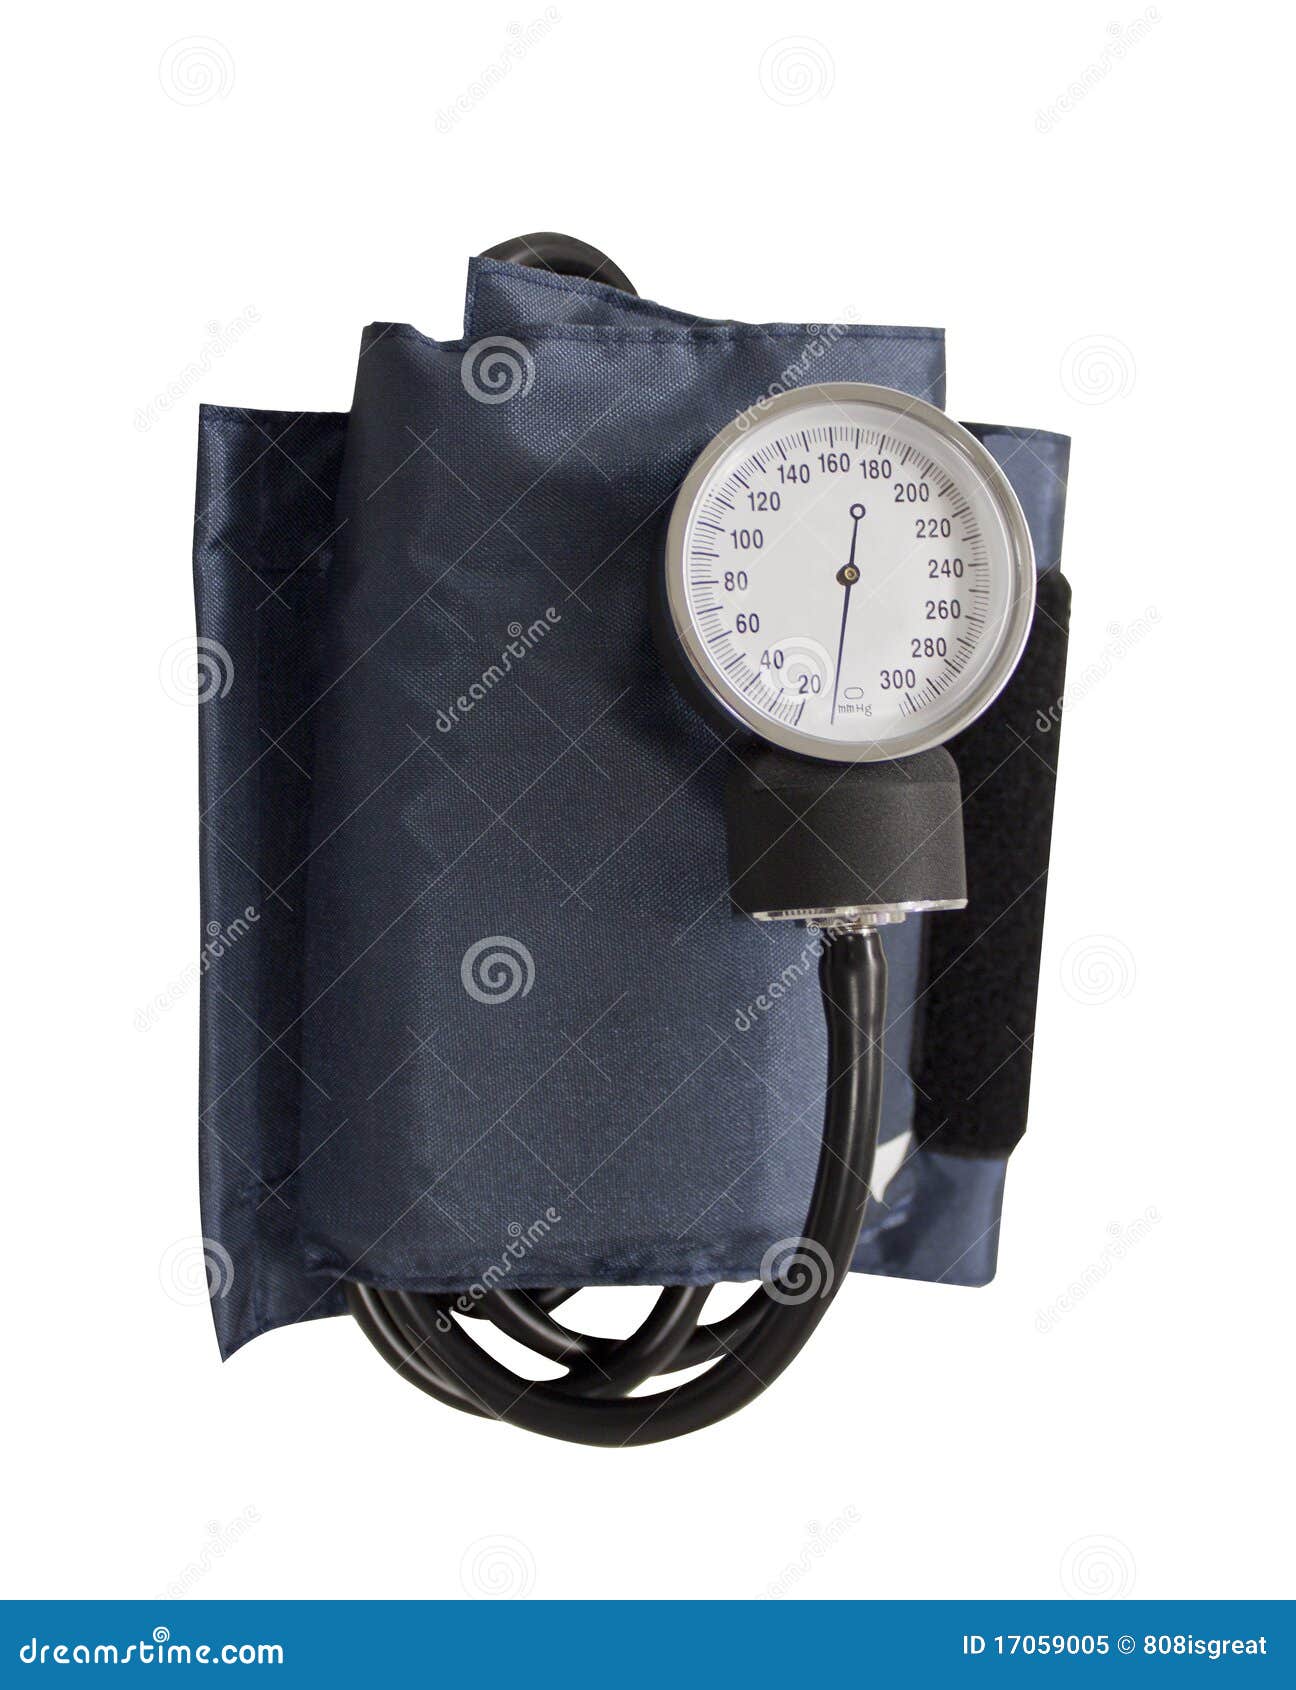 free clipart of blood pressure cuff - photo #38